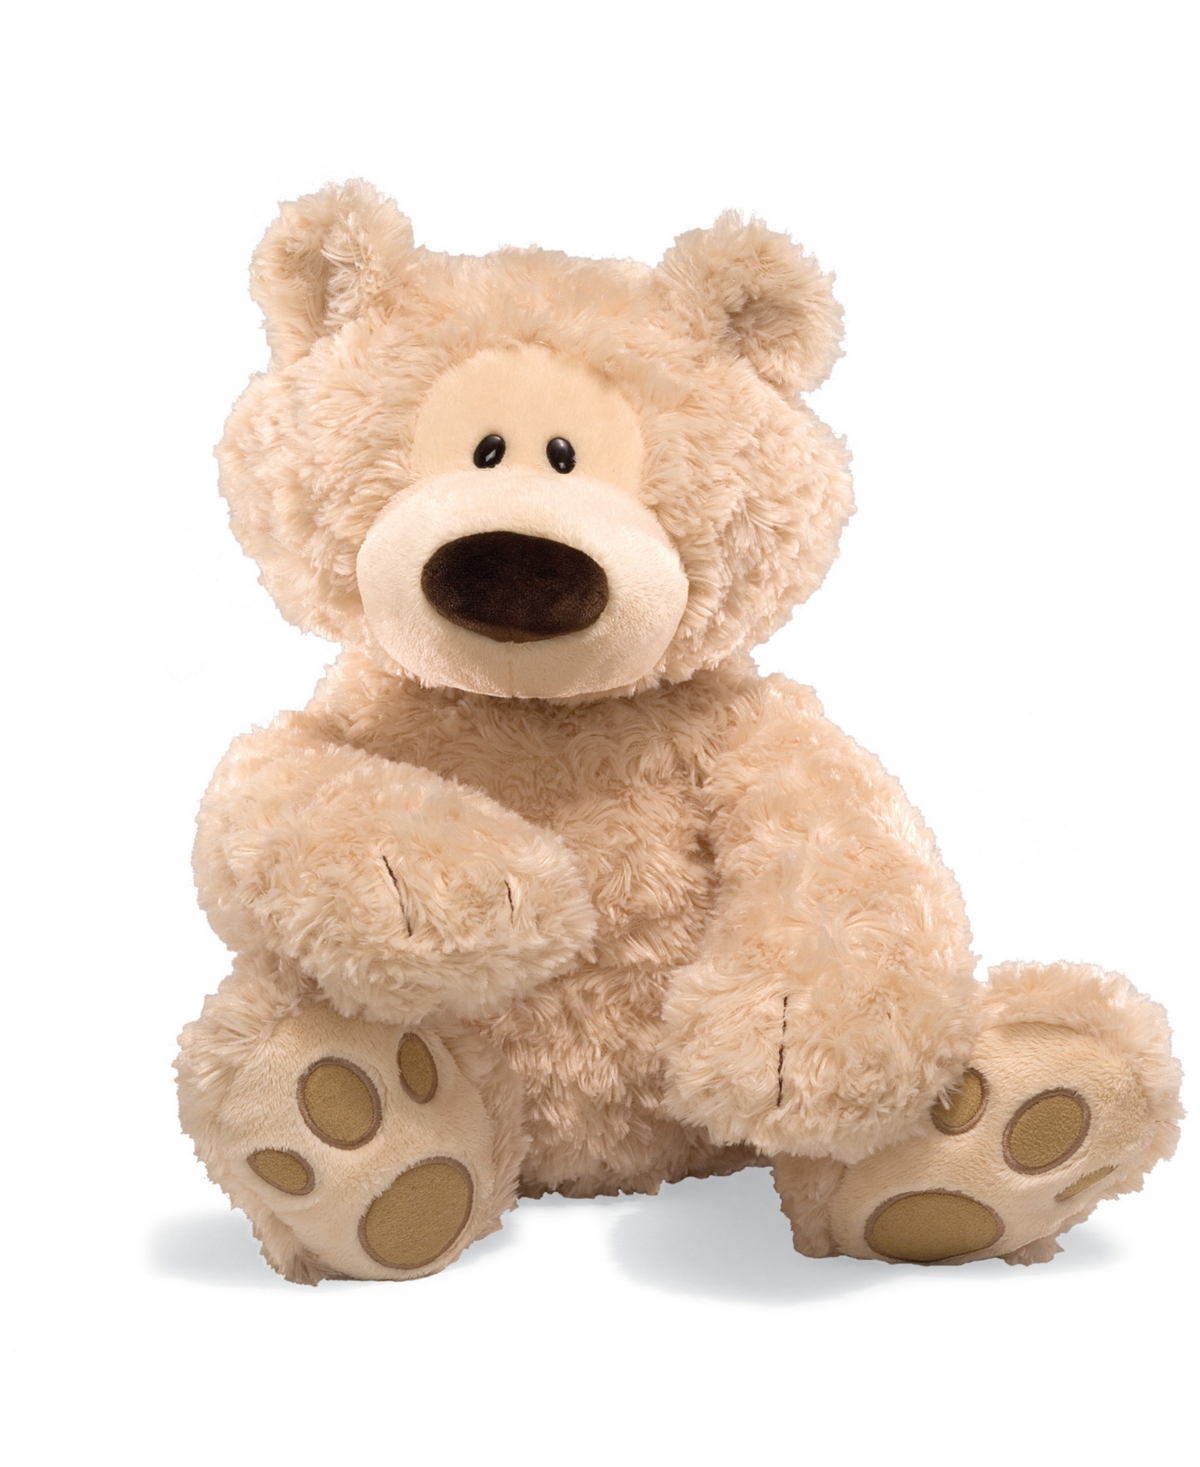 Gund Kids' Philbin Classic Teddy Bear, Premium Stuffed Animal, 18" In Multi-color